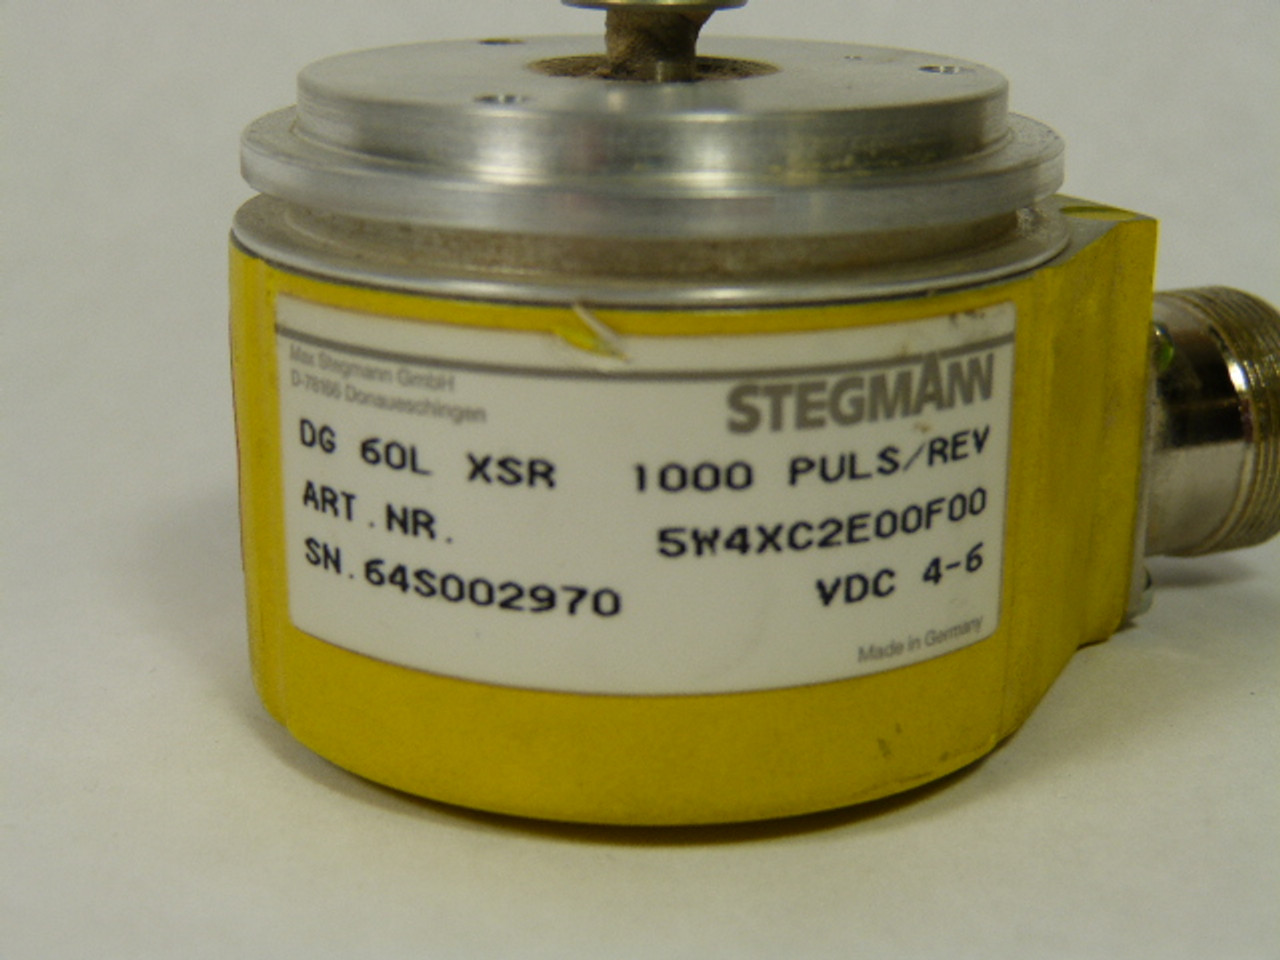 Stegmann DG-60L-XSR Incremental Encoder 1000puls/rev 4-6VDC USED